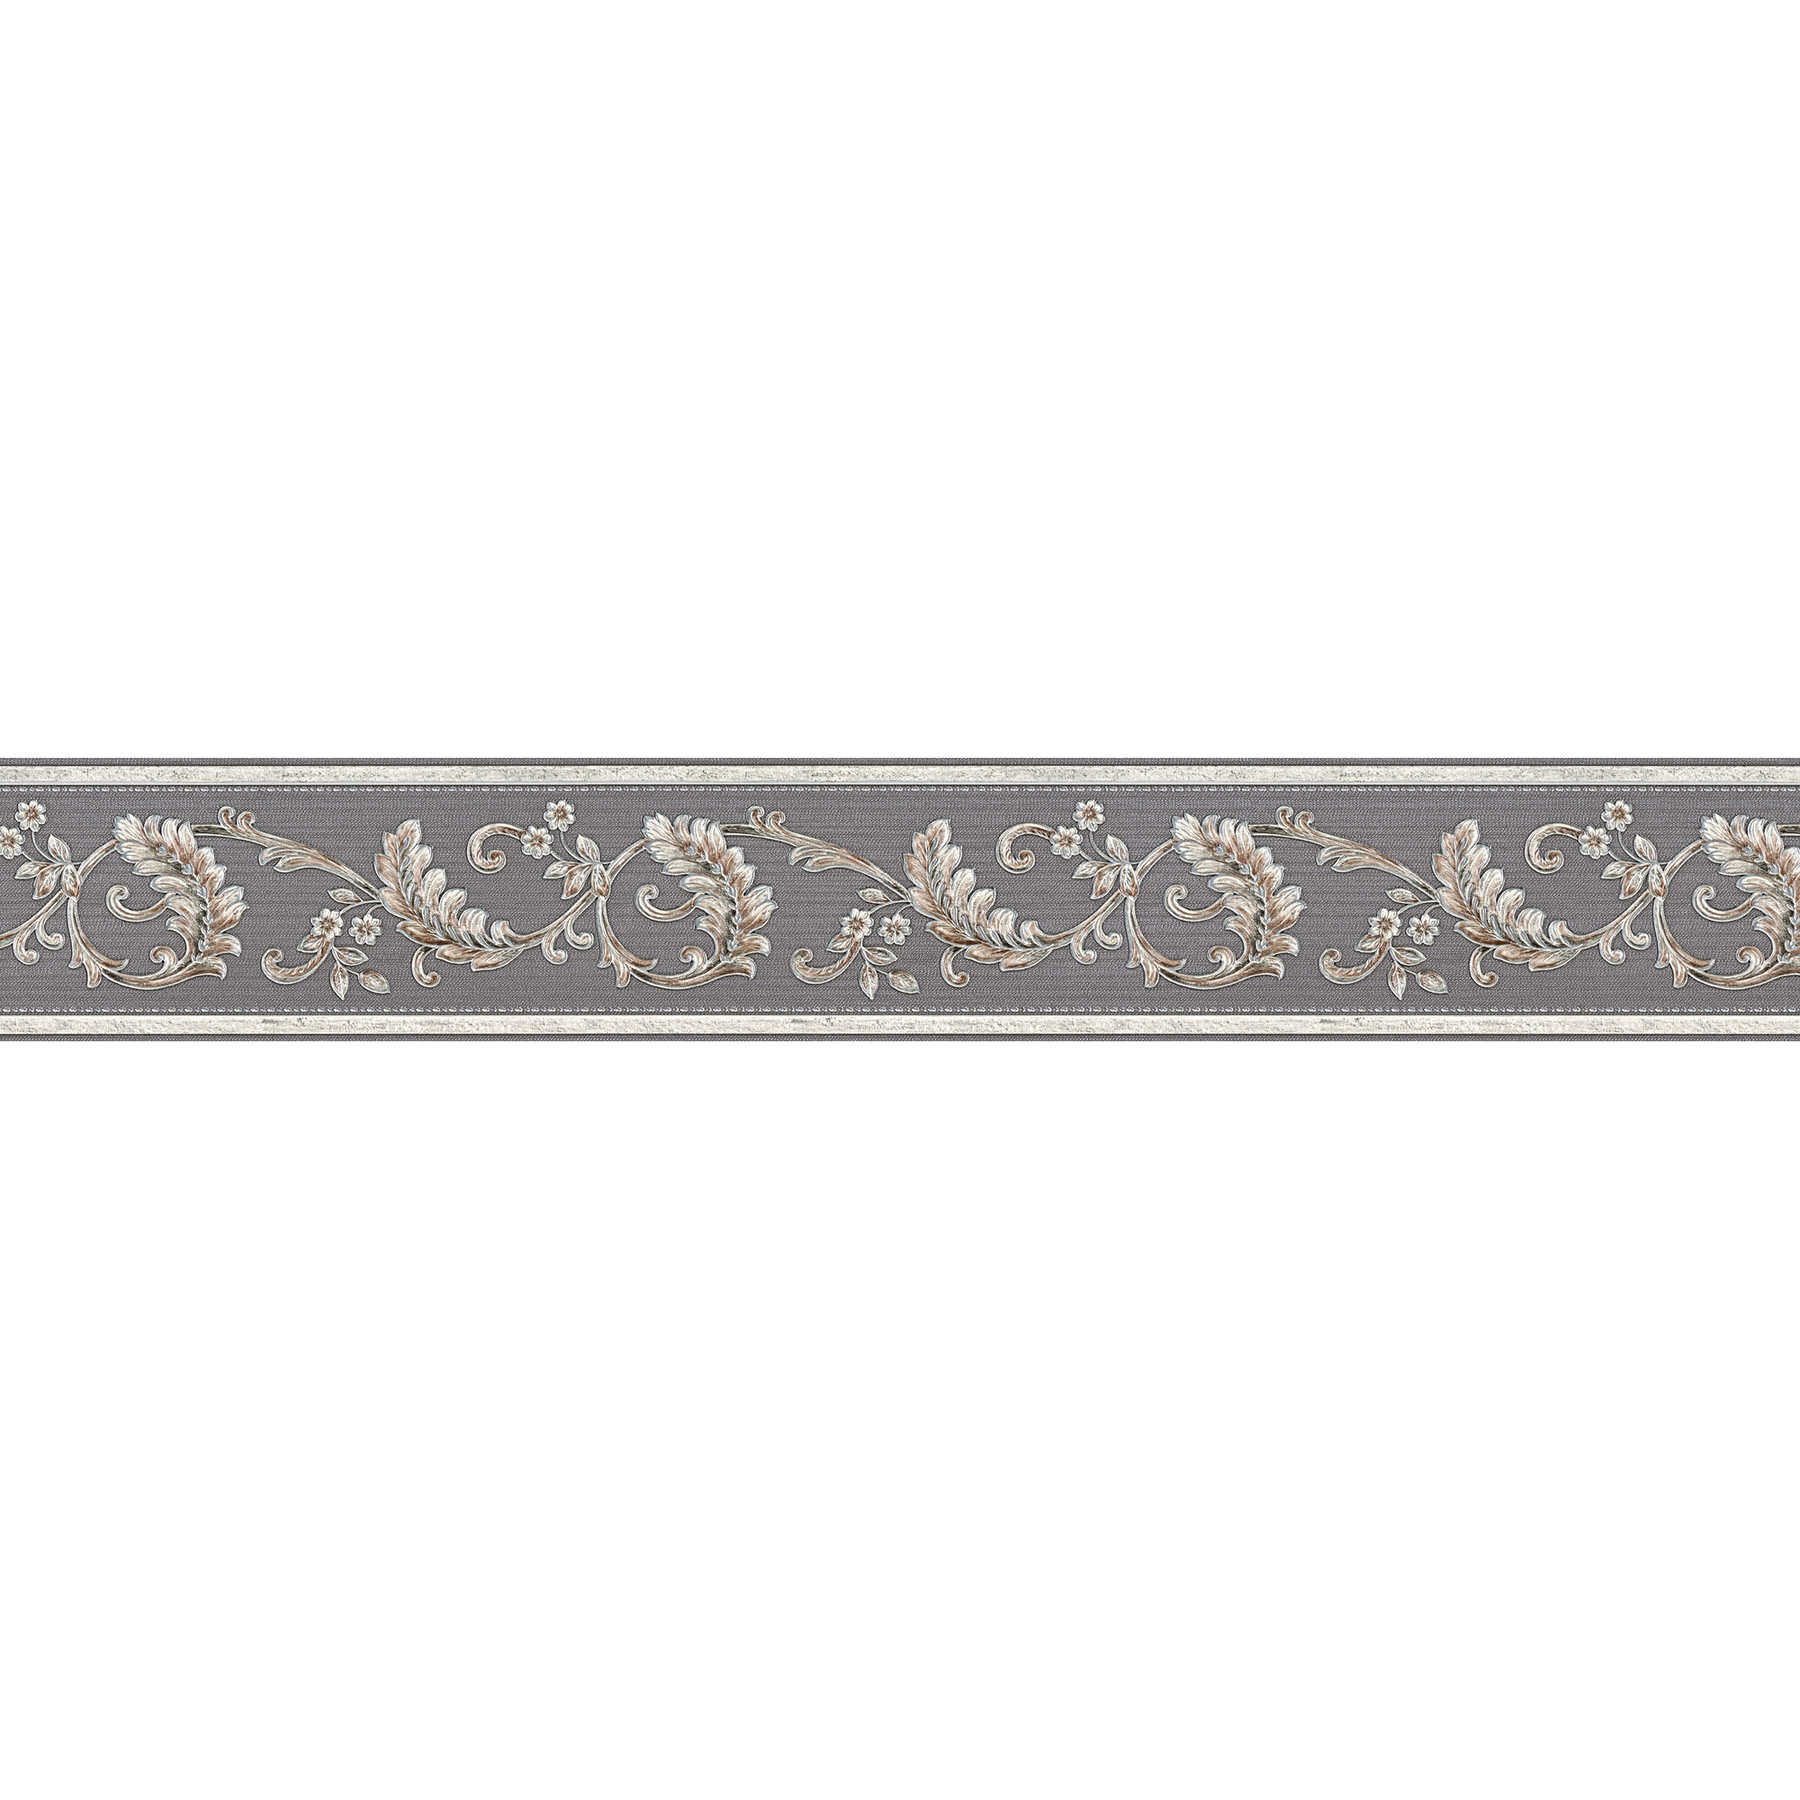 Tapetenborte mit Metallic-Effekt & Ornamentdesign – Grau
